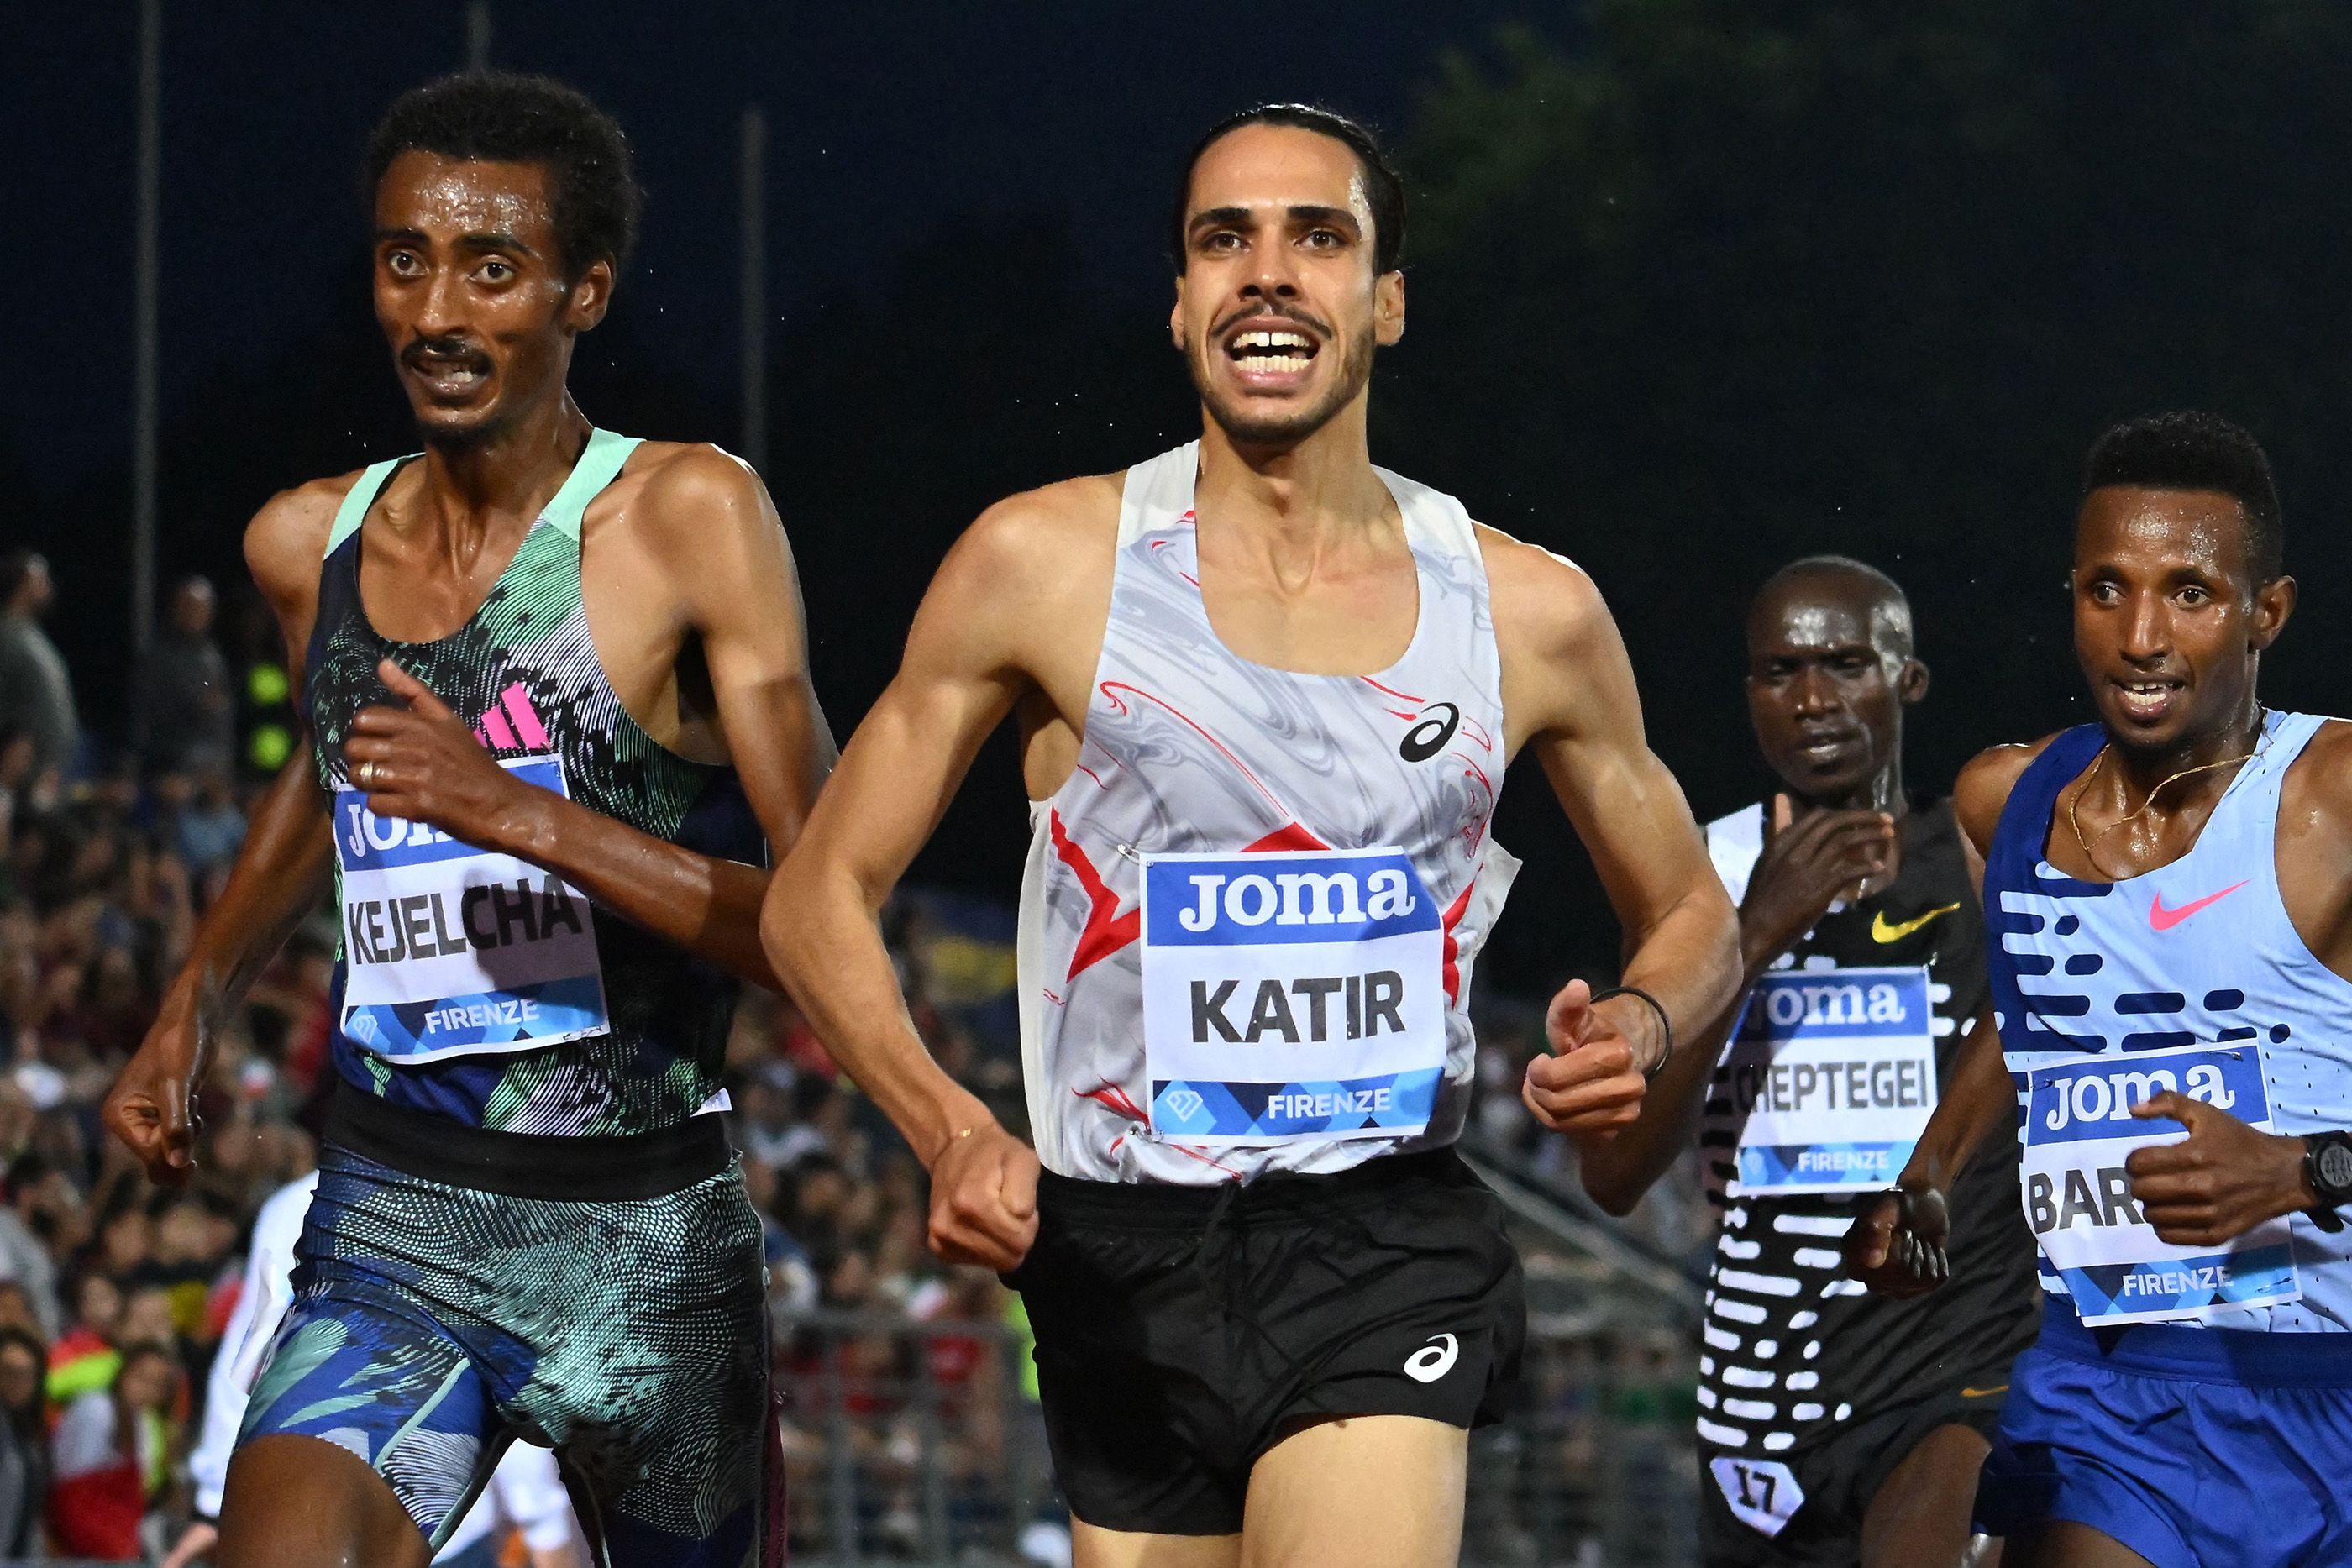 Mohamed Katir holds off Yomif Kejelcha in a 5000m battle in Florence